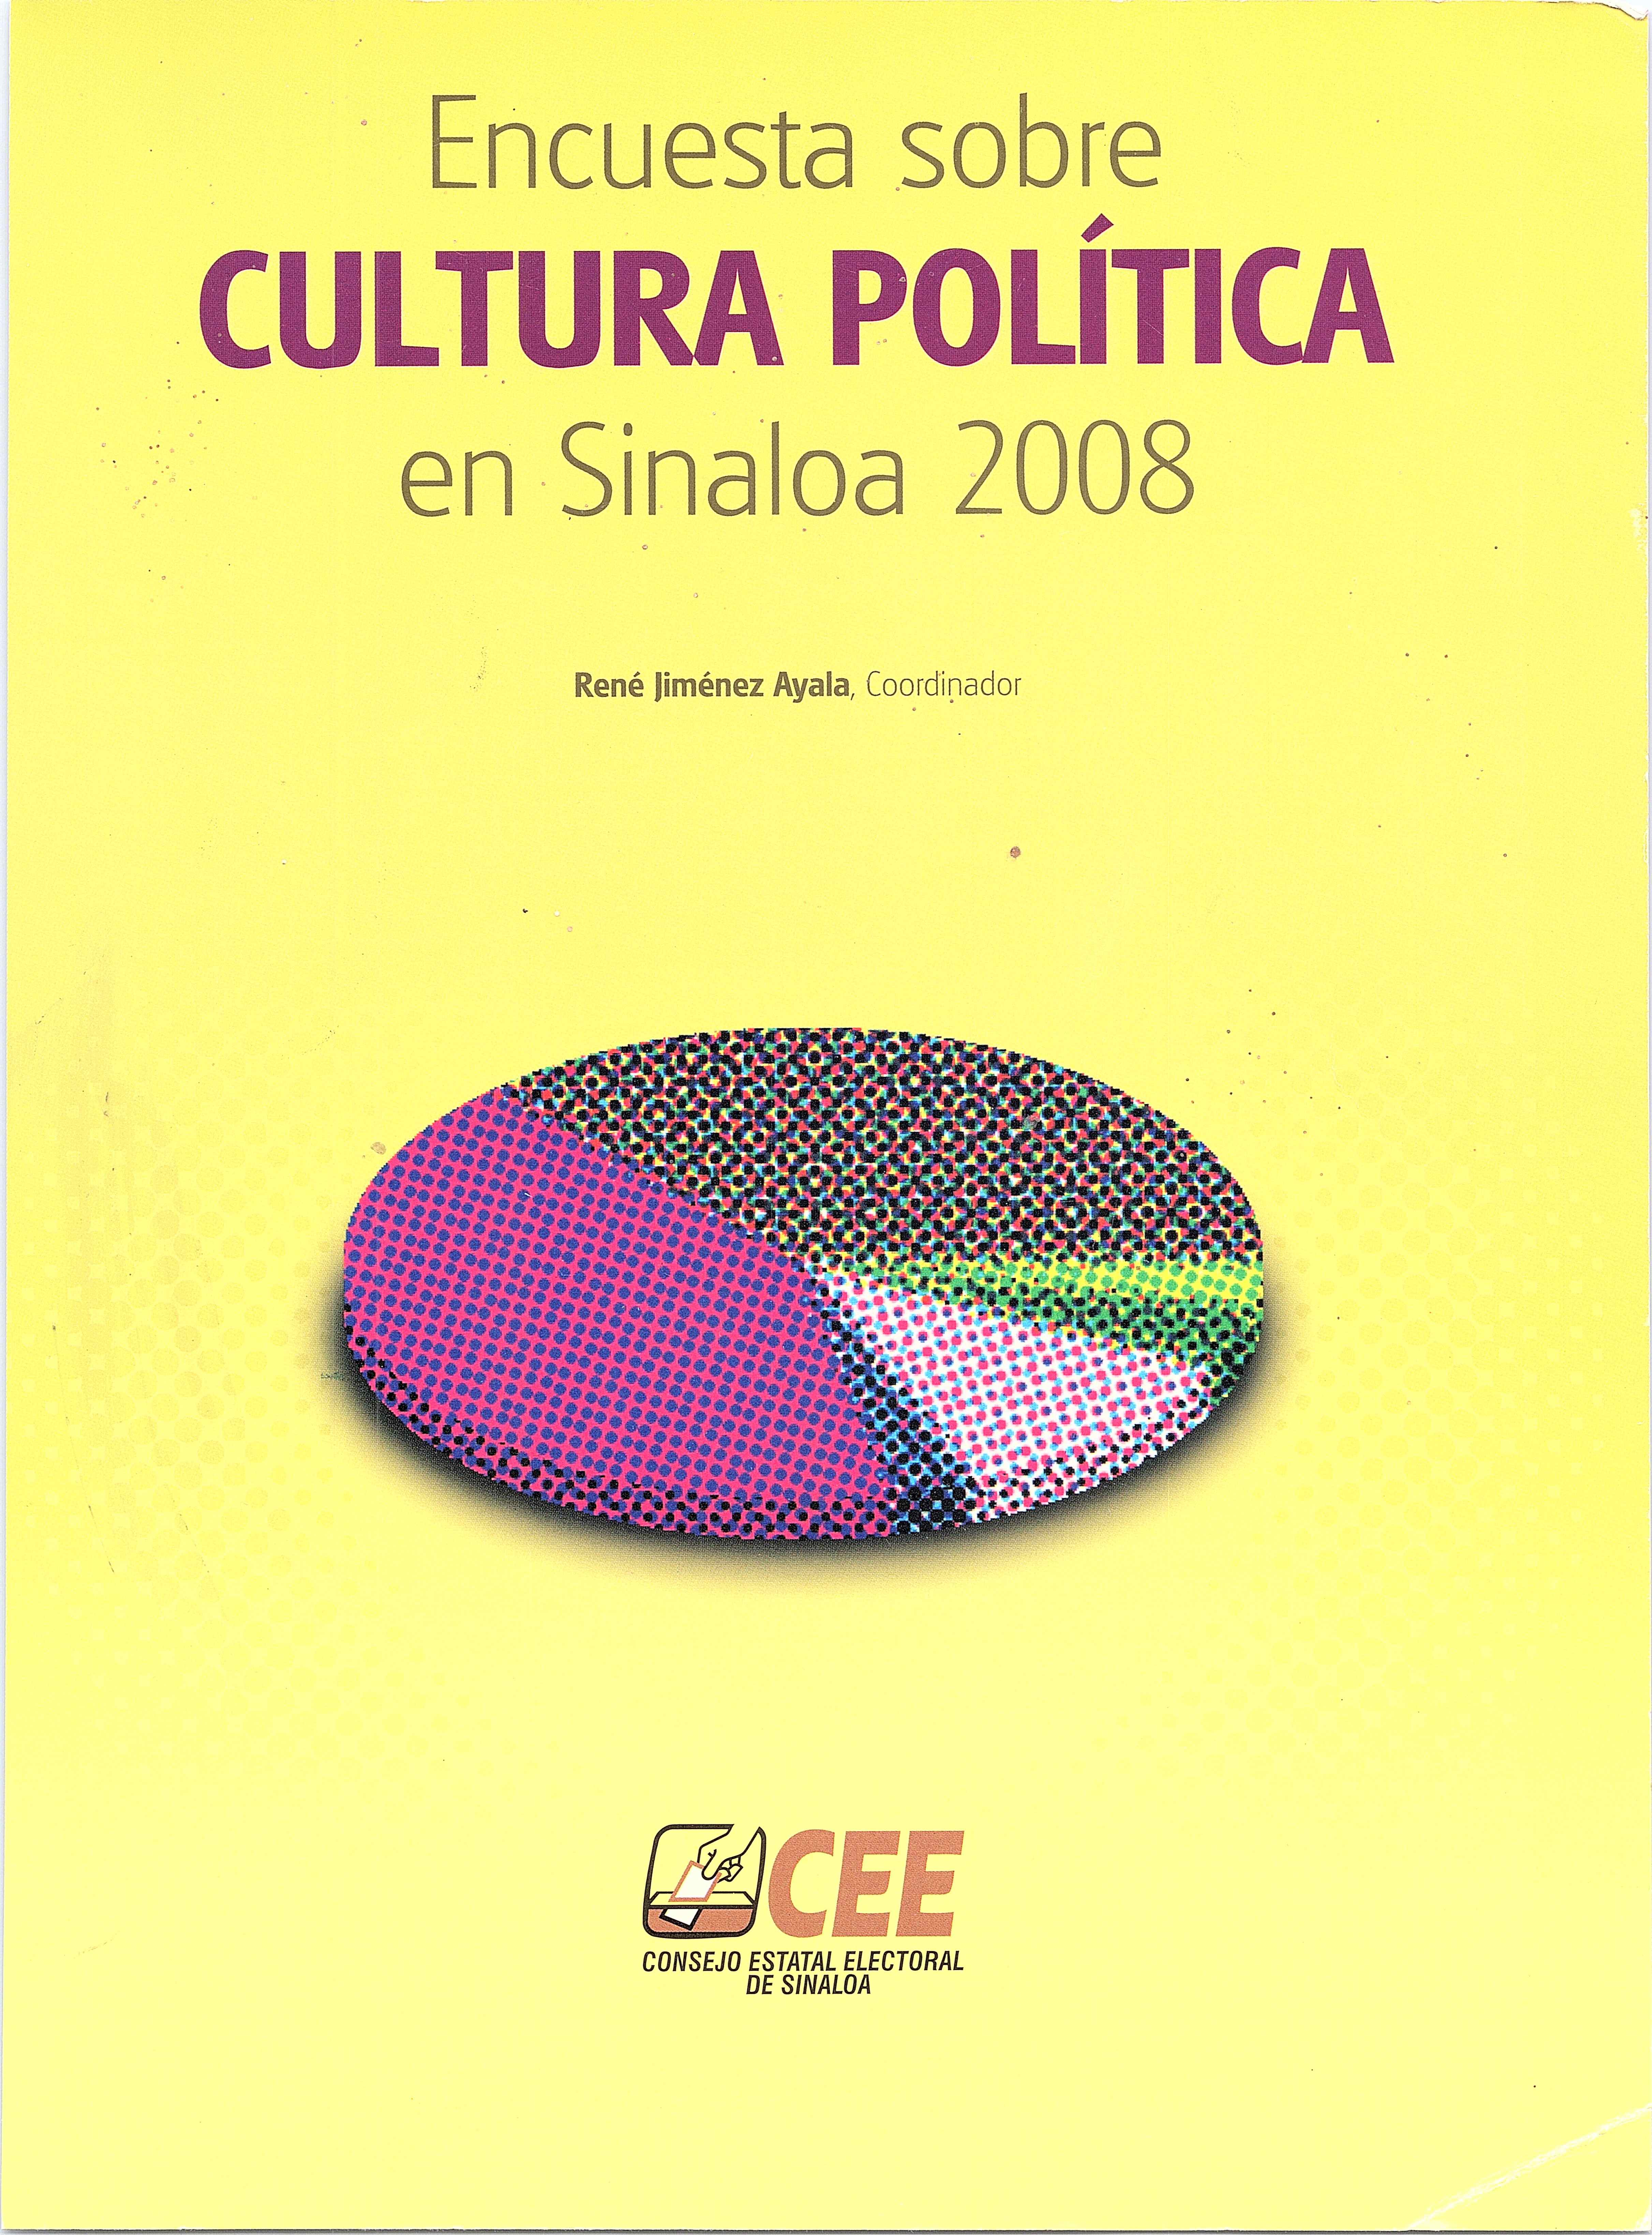 Encuesta sobre cultura política en Sinaloa 2008